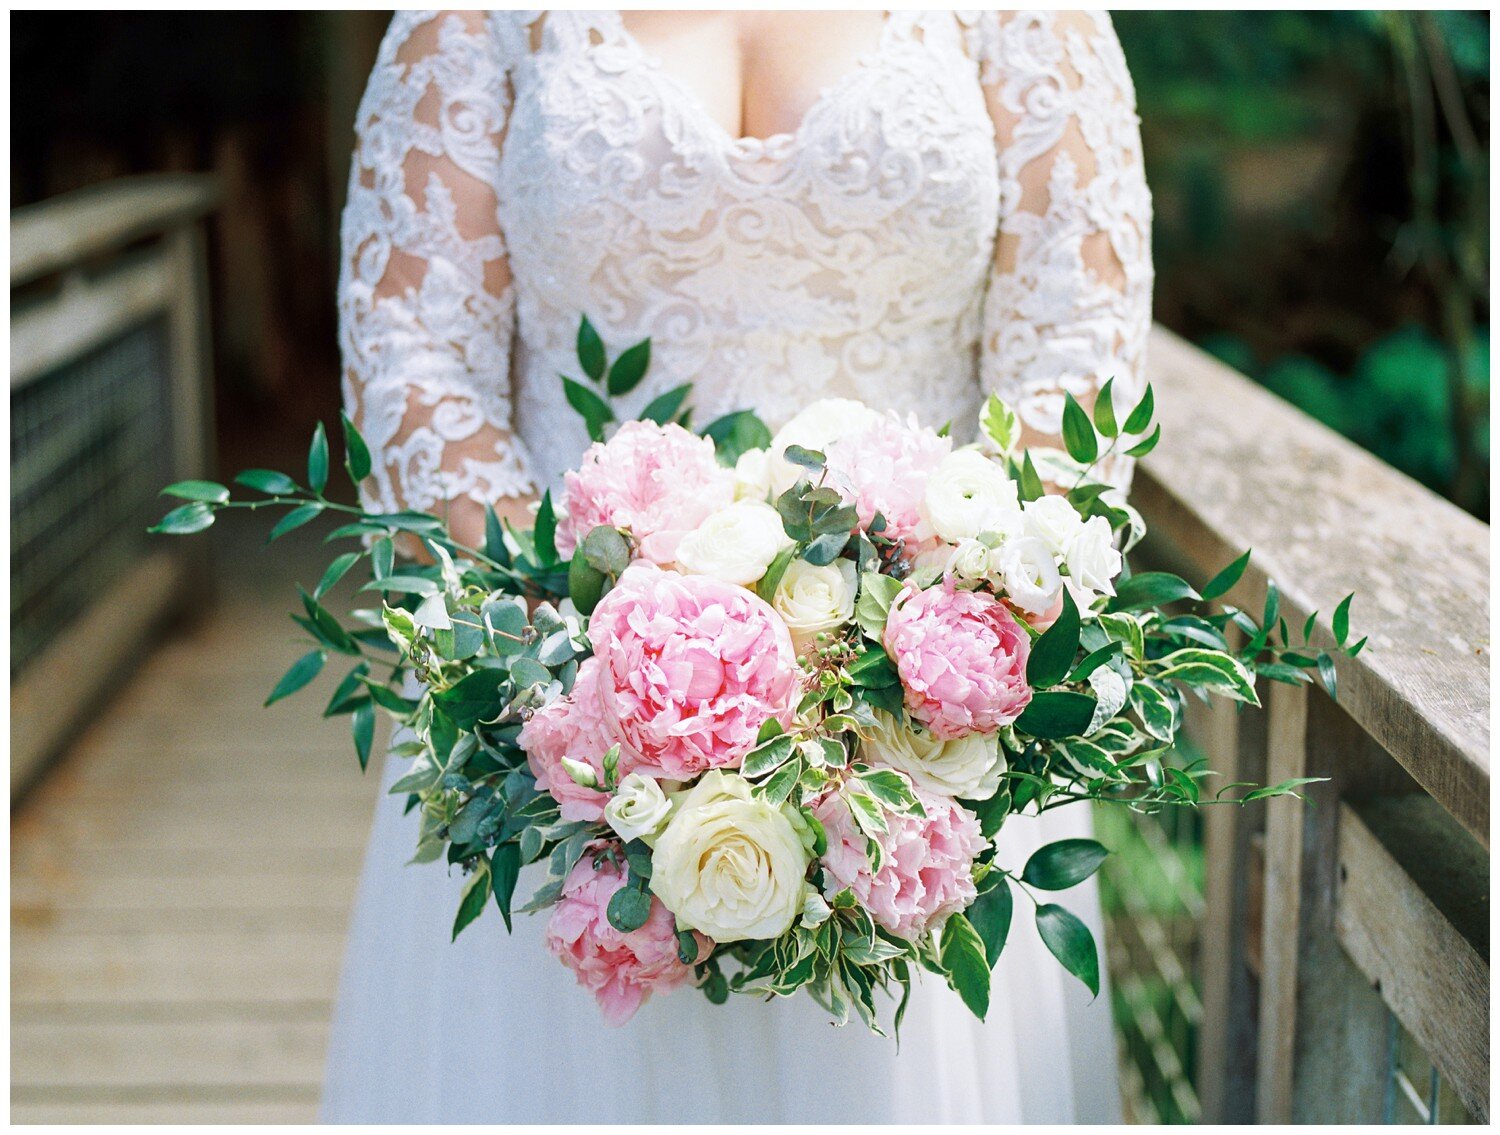 Fena Flowers wedding bouquet at Alderbrook Resort